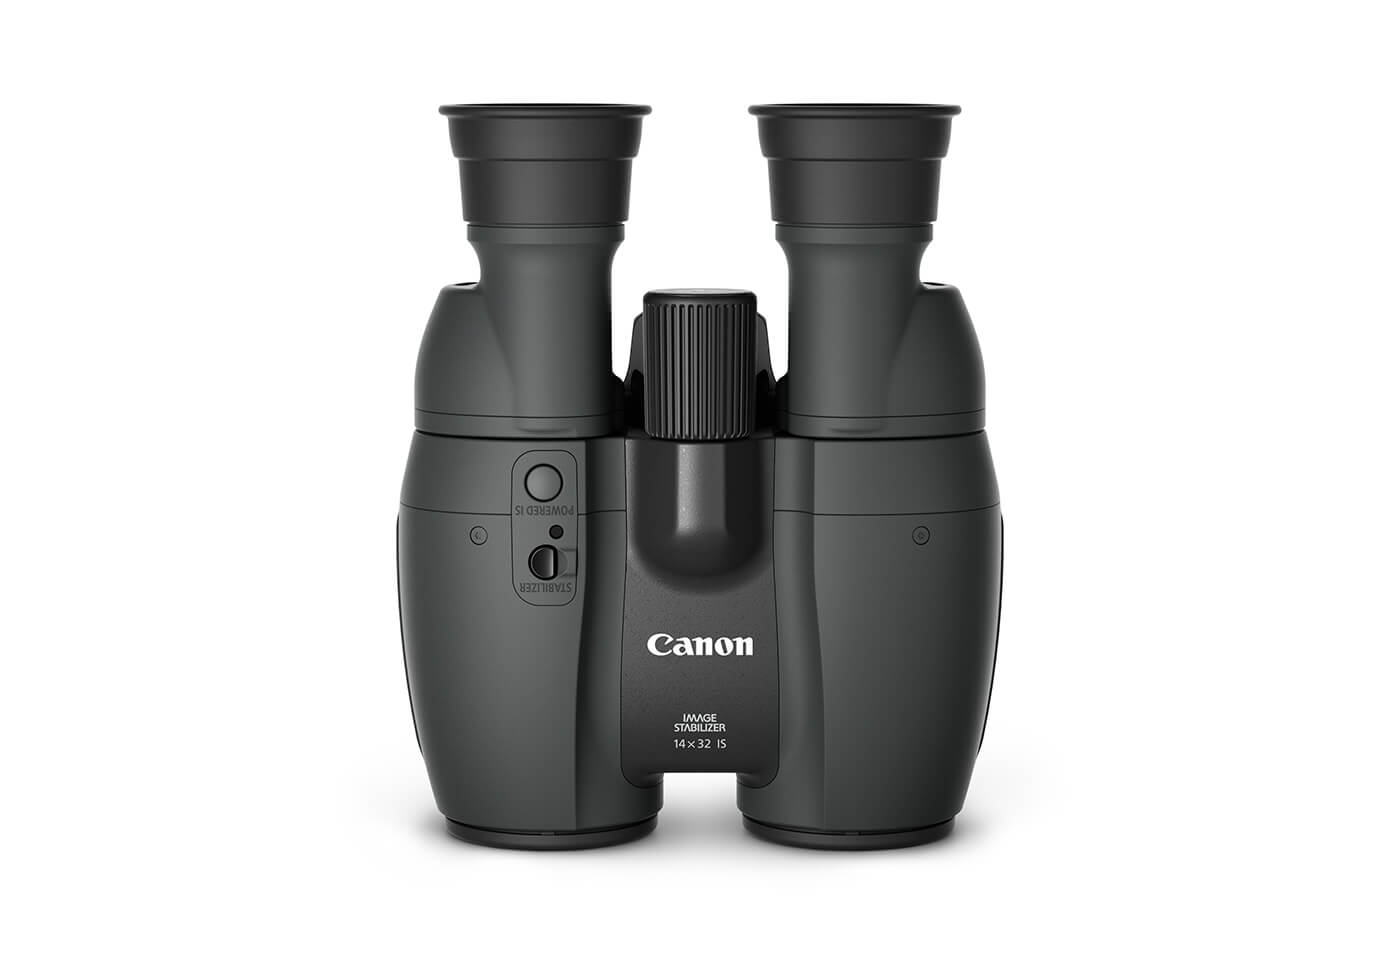 Canon 14x32 binoculars front image